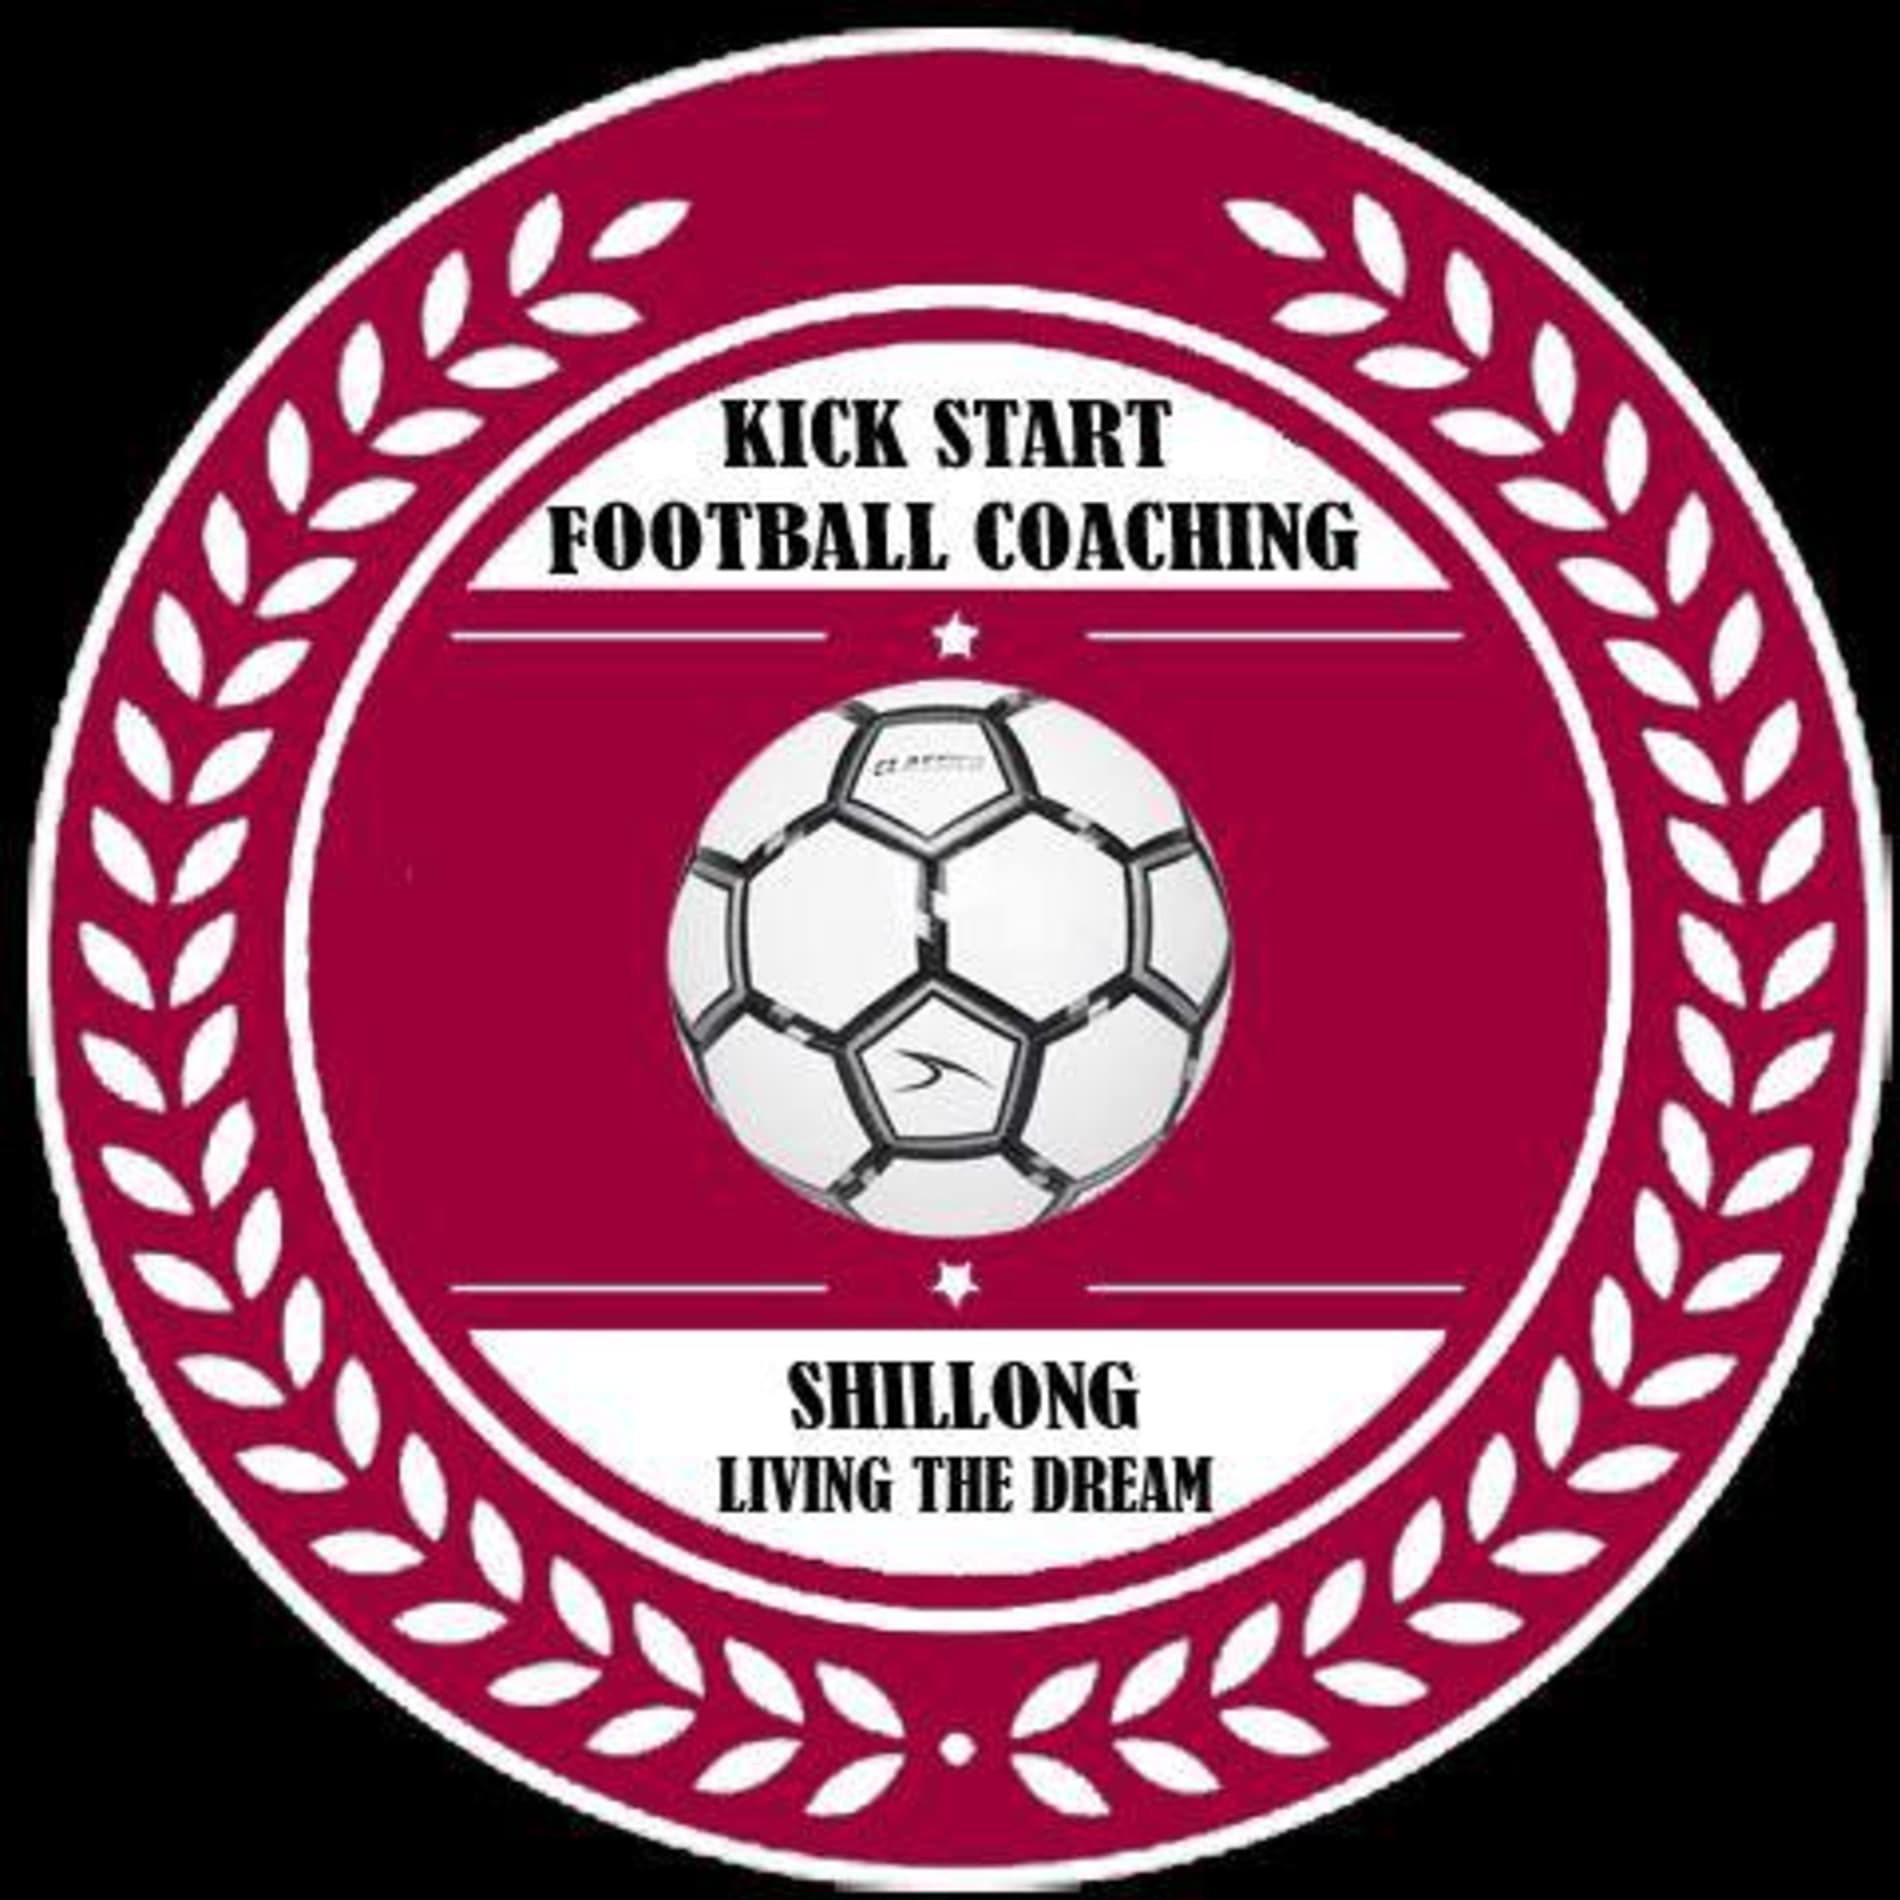 Kick Start Football Coaching Centre Shillong